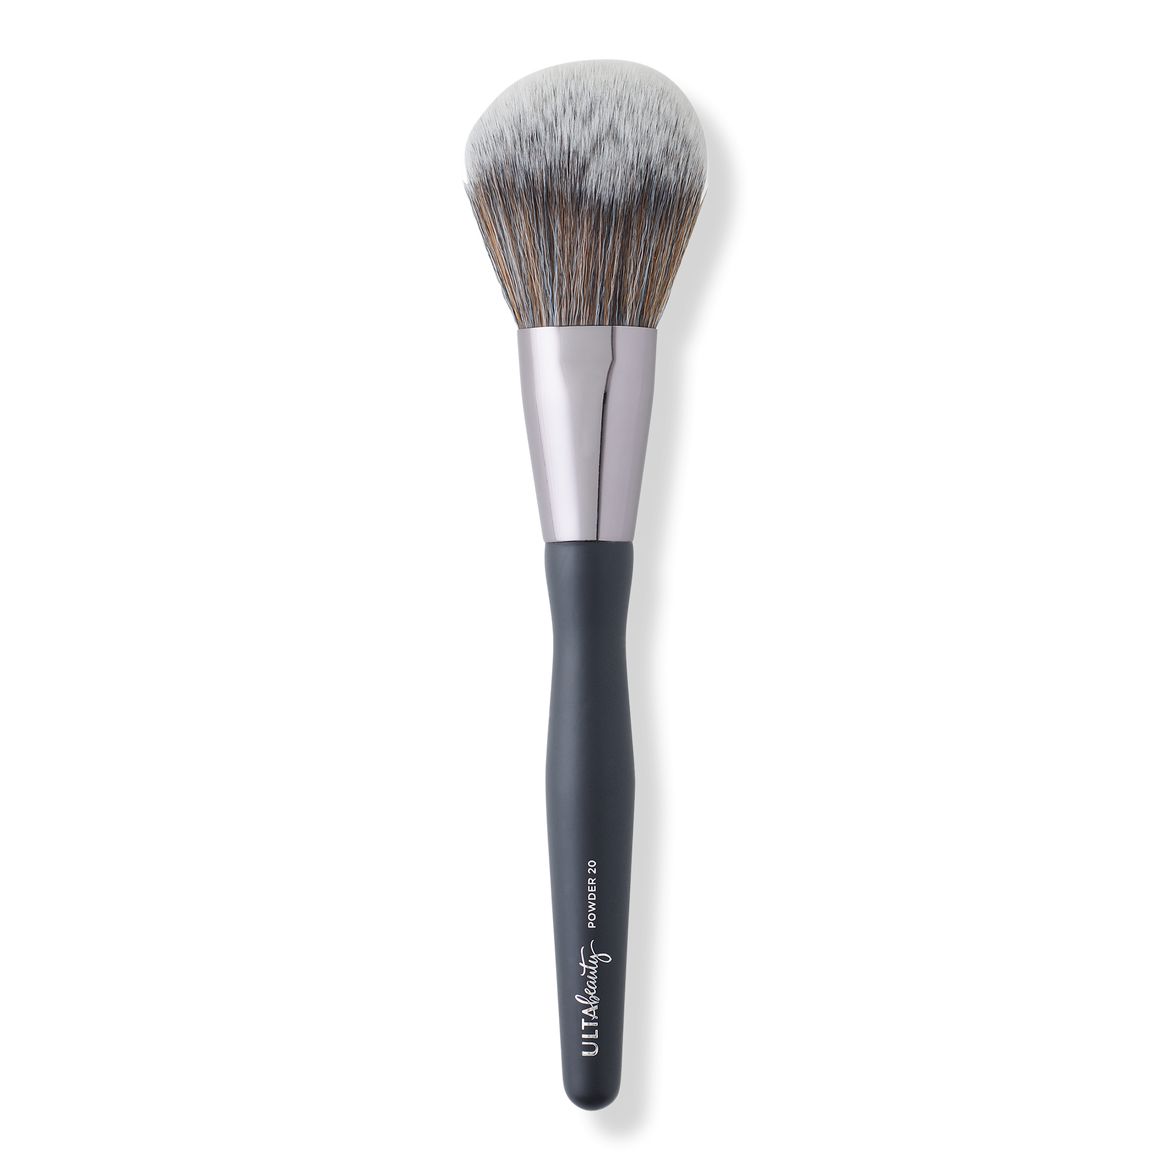 ULTA Beauty CollectionPowder Brush #20 | Ulta